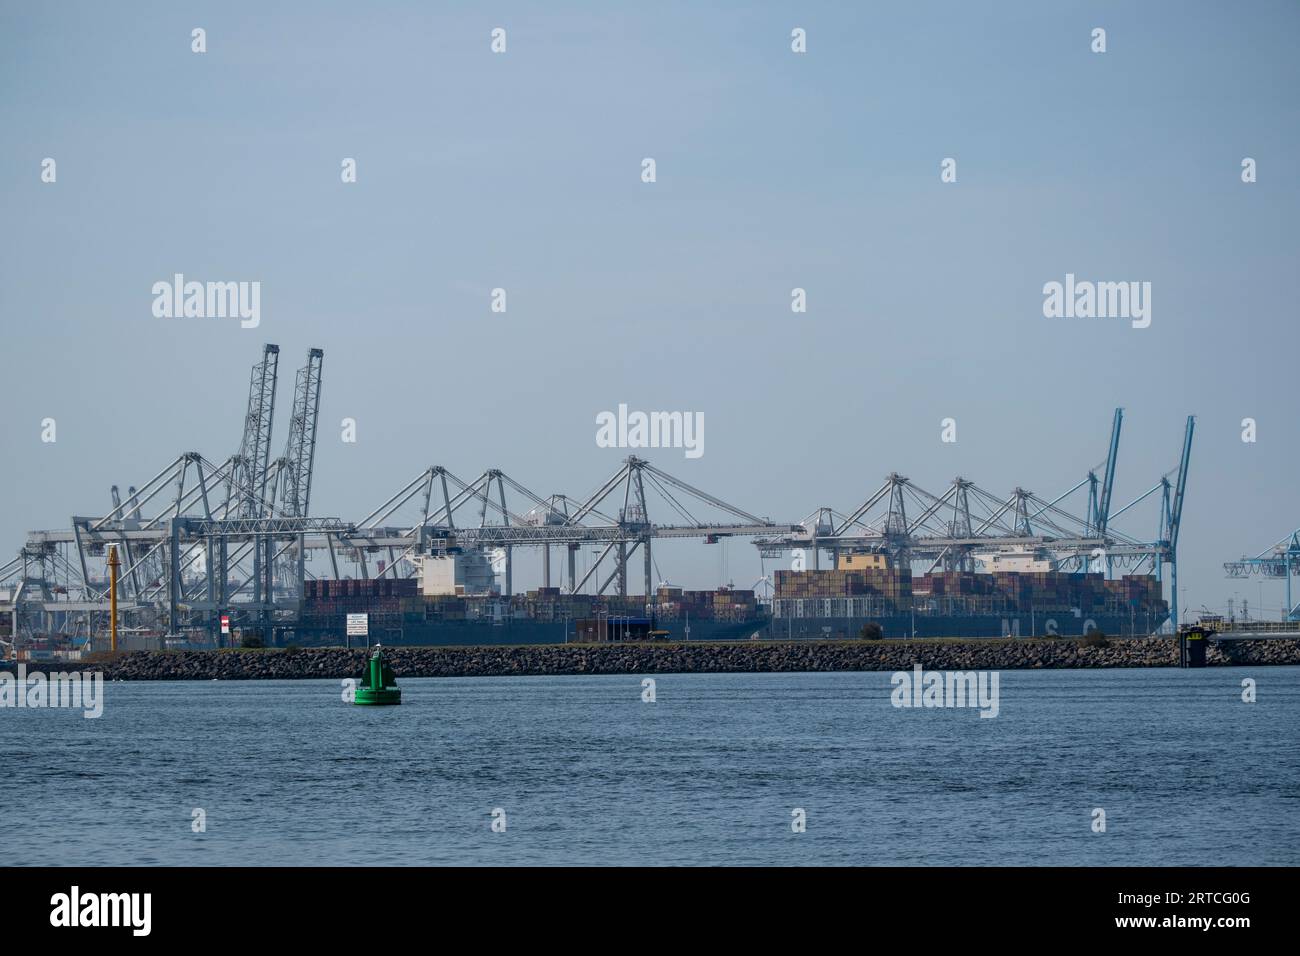 ROTTERDAM, NIEDERLANDE - Maasvlakte, Rotterdam, Niederlande - Hafen Rotterdam Maasflakte Schiffshafen Industriehafen. Stockfoto